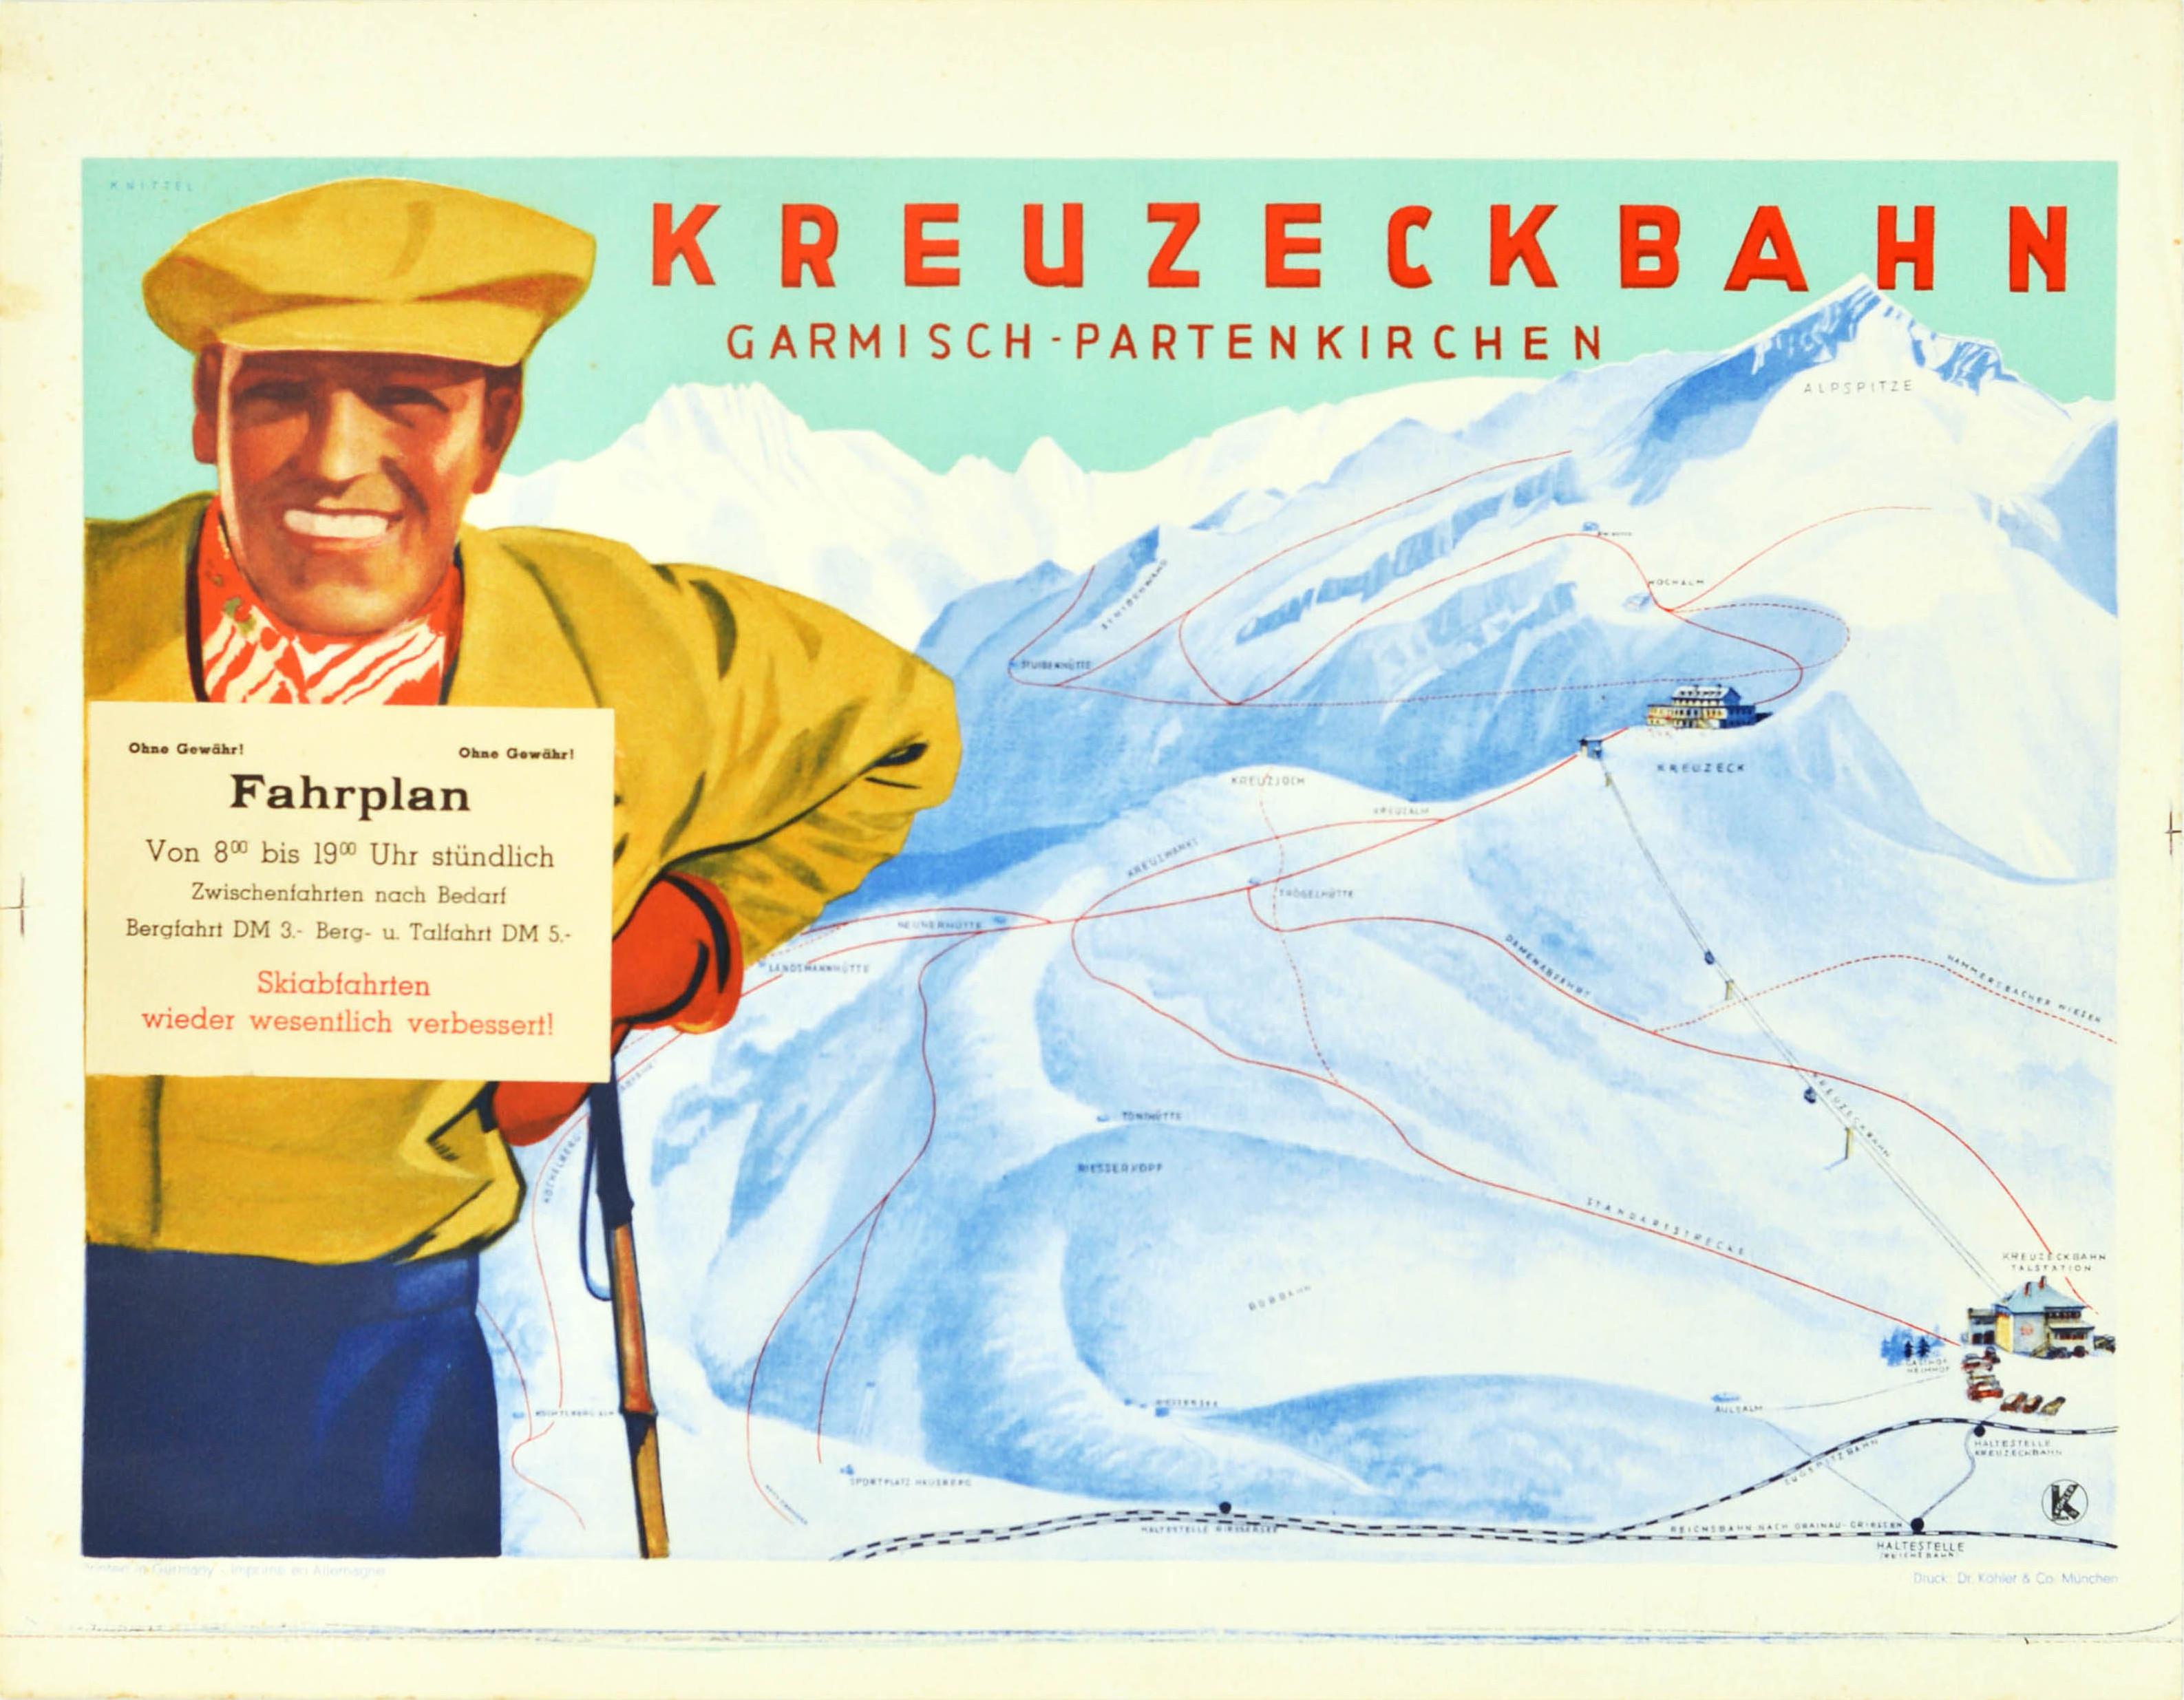 Unknown Print - Original Vintage Poster Kreuzeck Bahn Garmisch Partenkirchen Skiing Cable Car